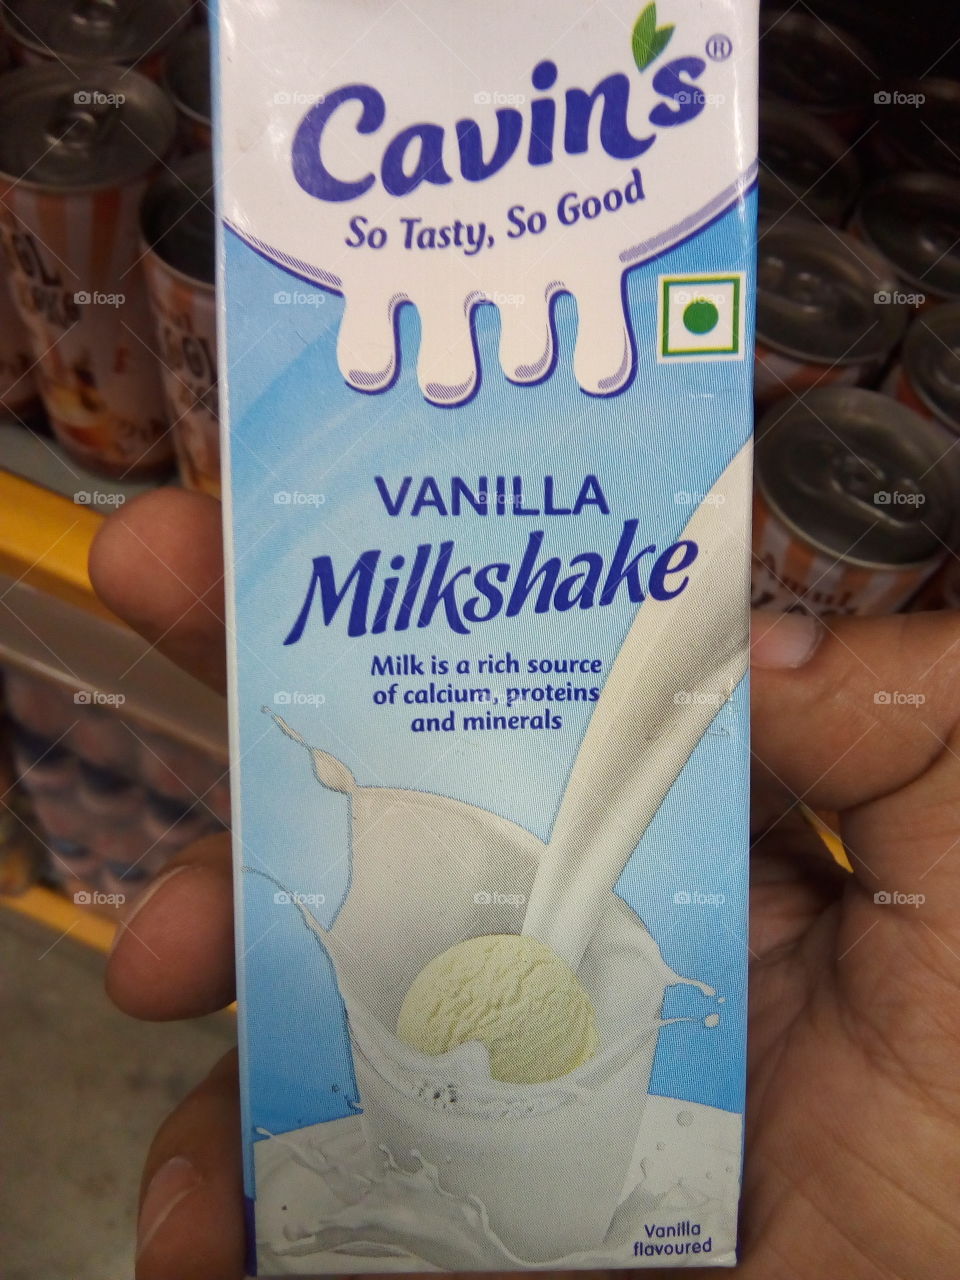 Cavin's vanilla milkshake so tasty so good.